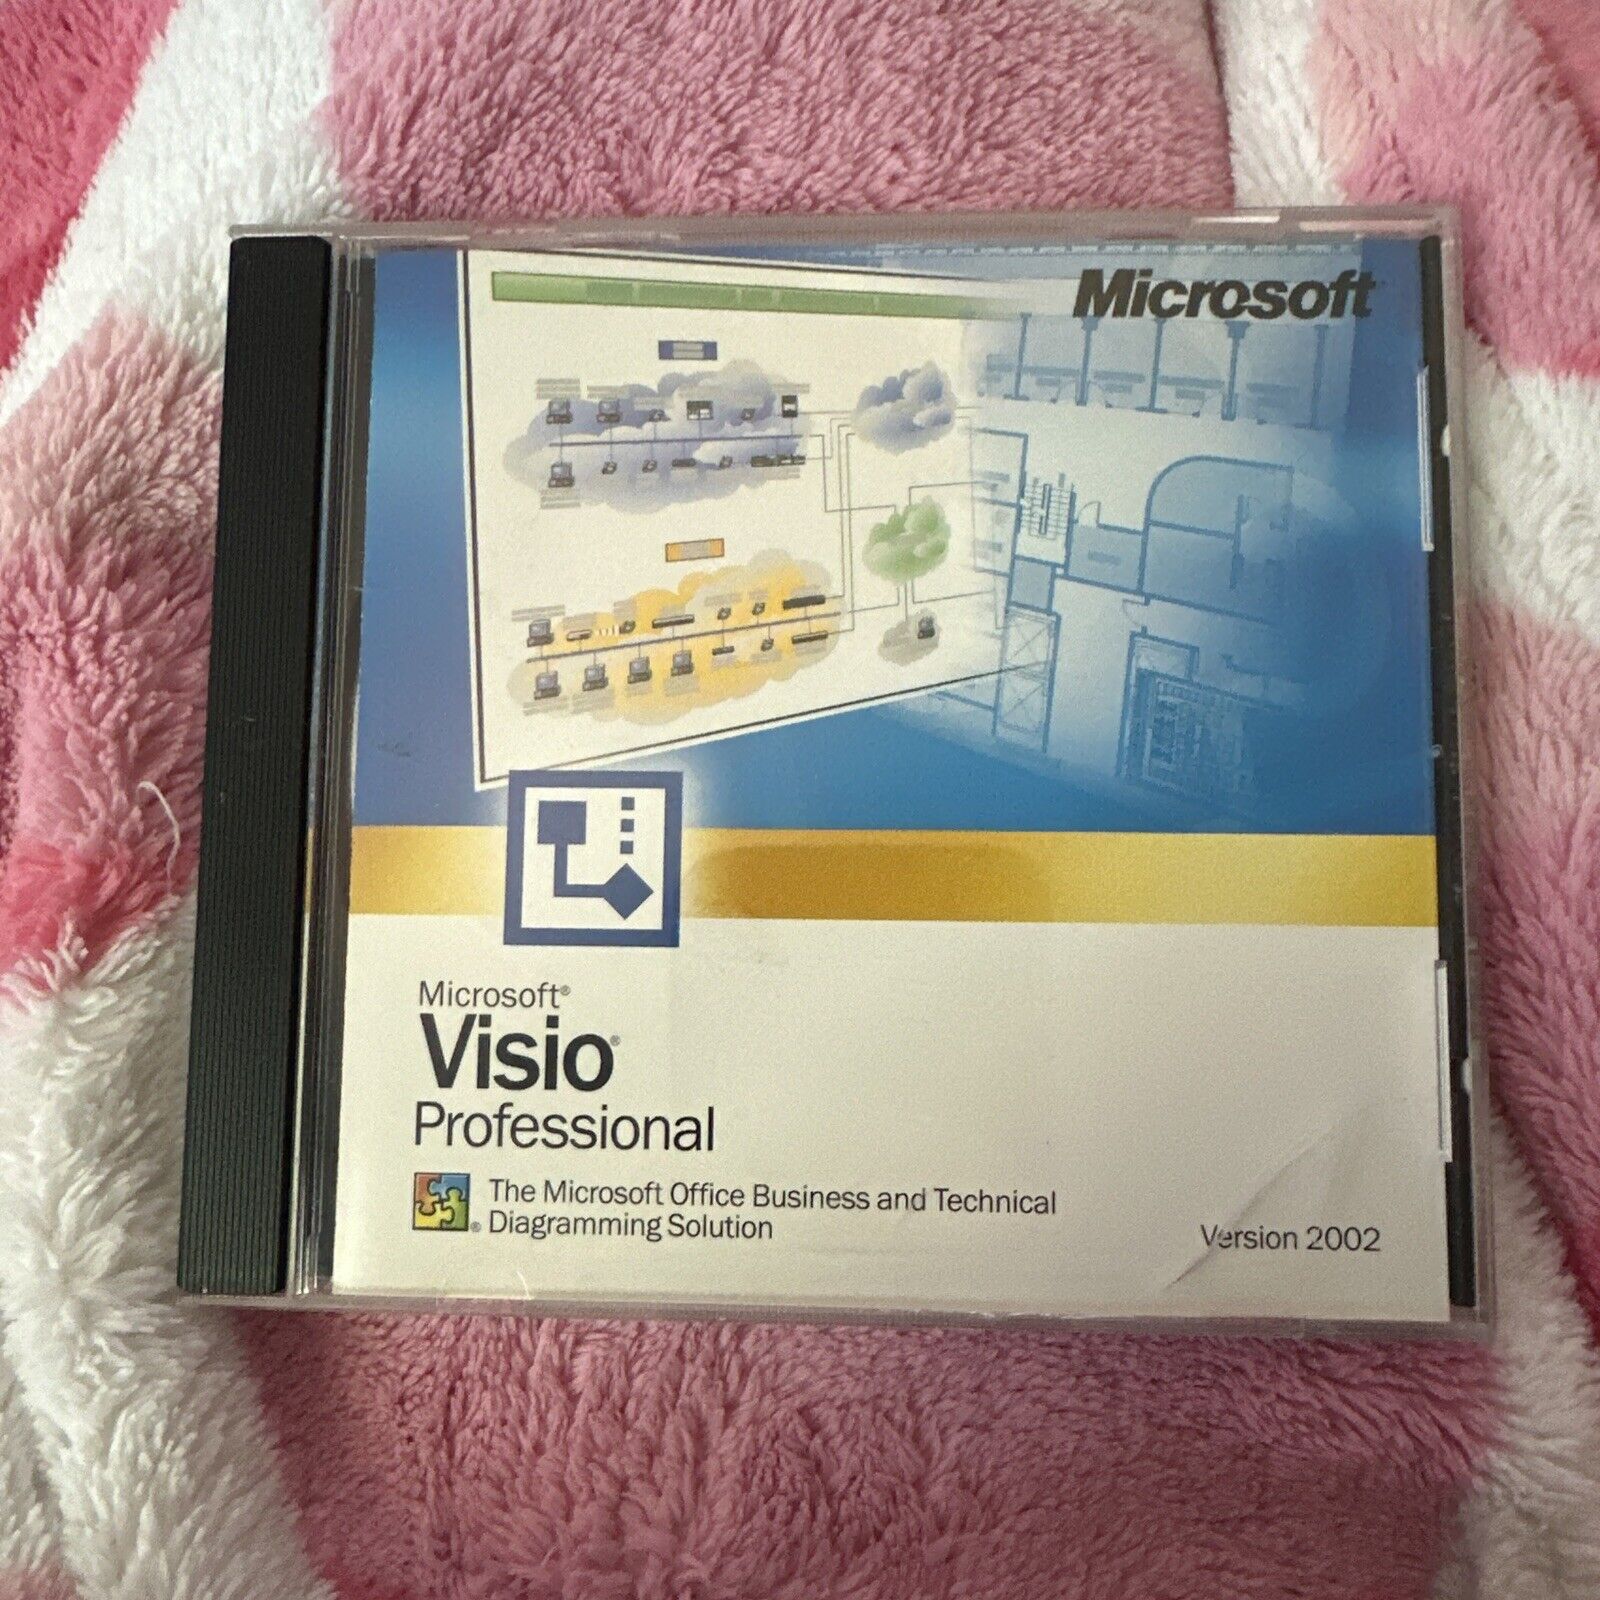 Microsoft Visio Professional Version 2002